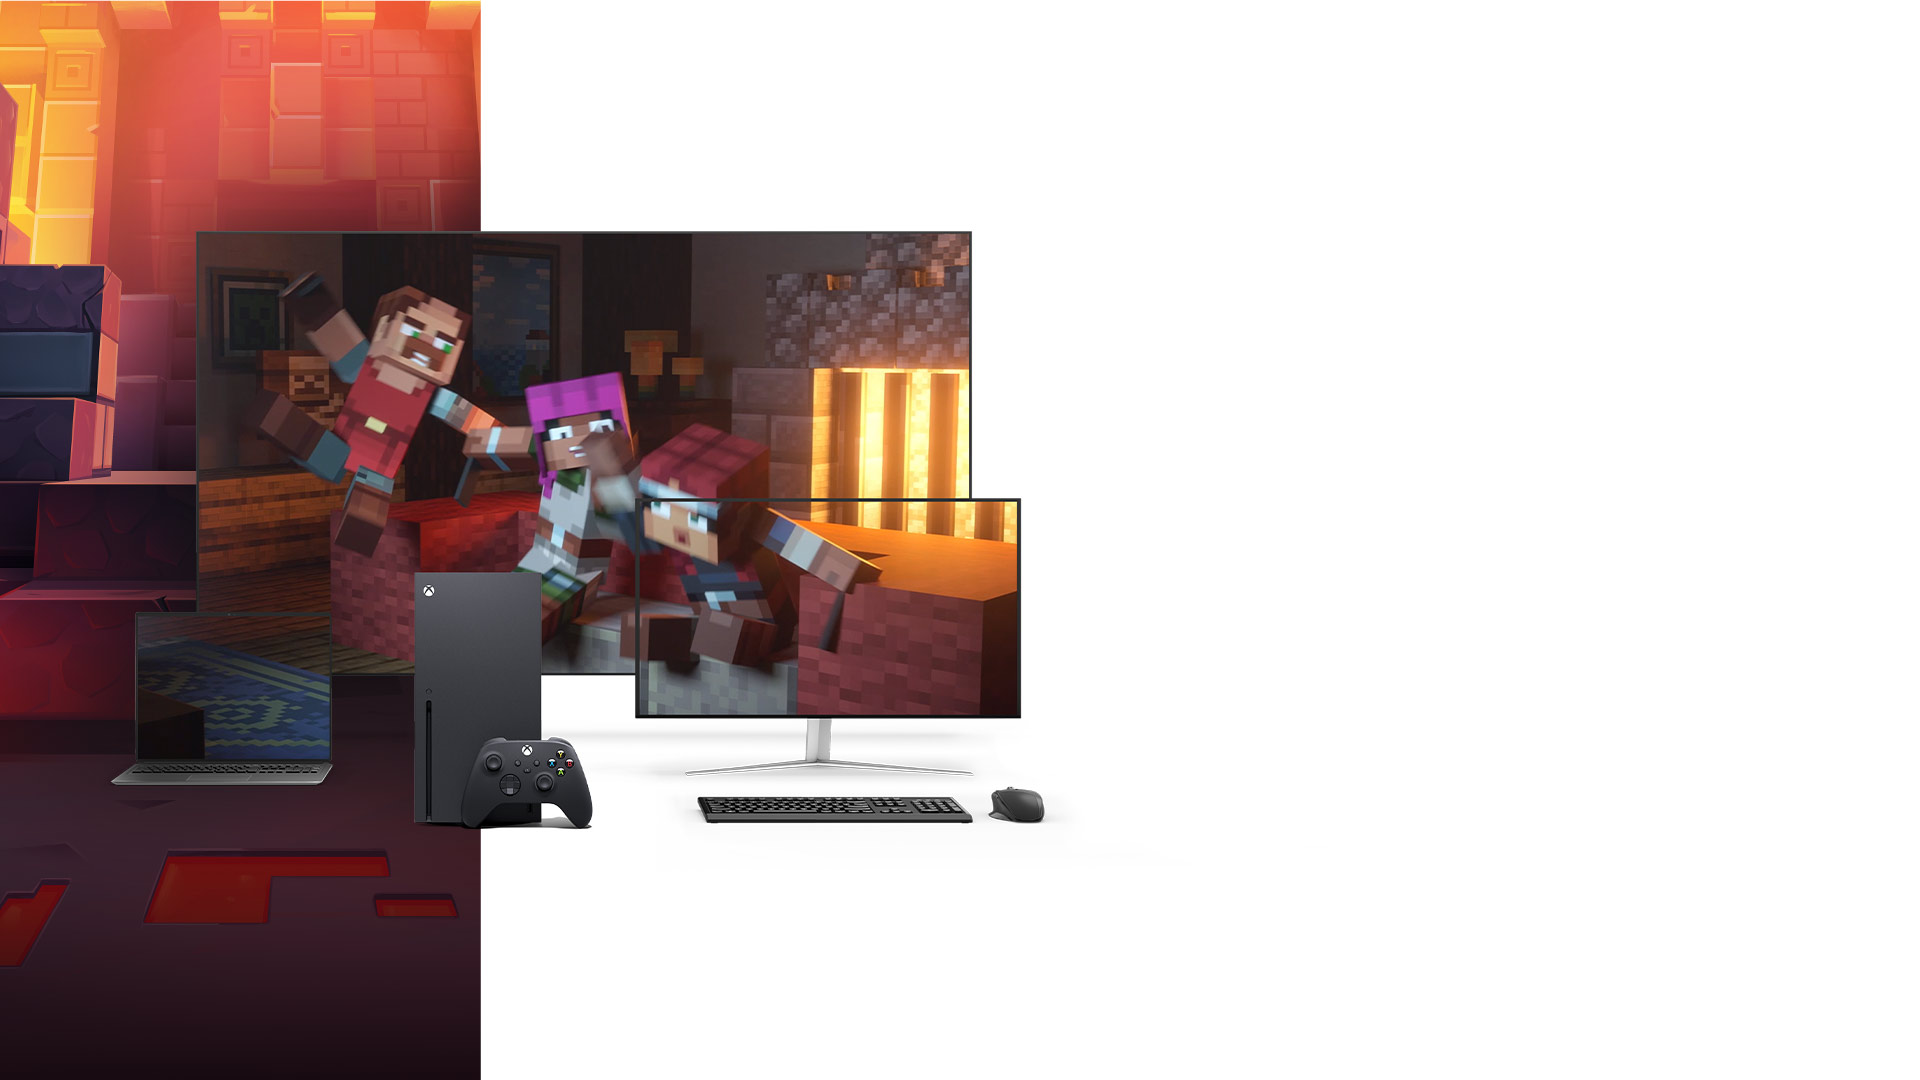 Xbox Series X 主機以及膝上型電腦、電腦顯示器和電視顯示 Minecraft Dungeons